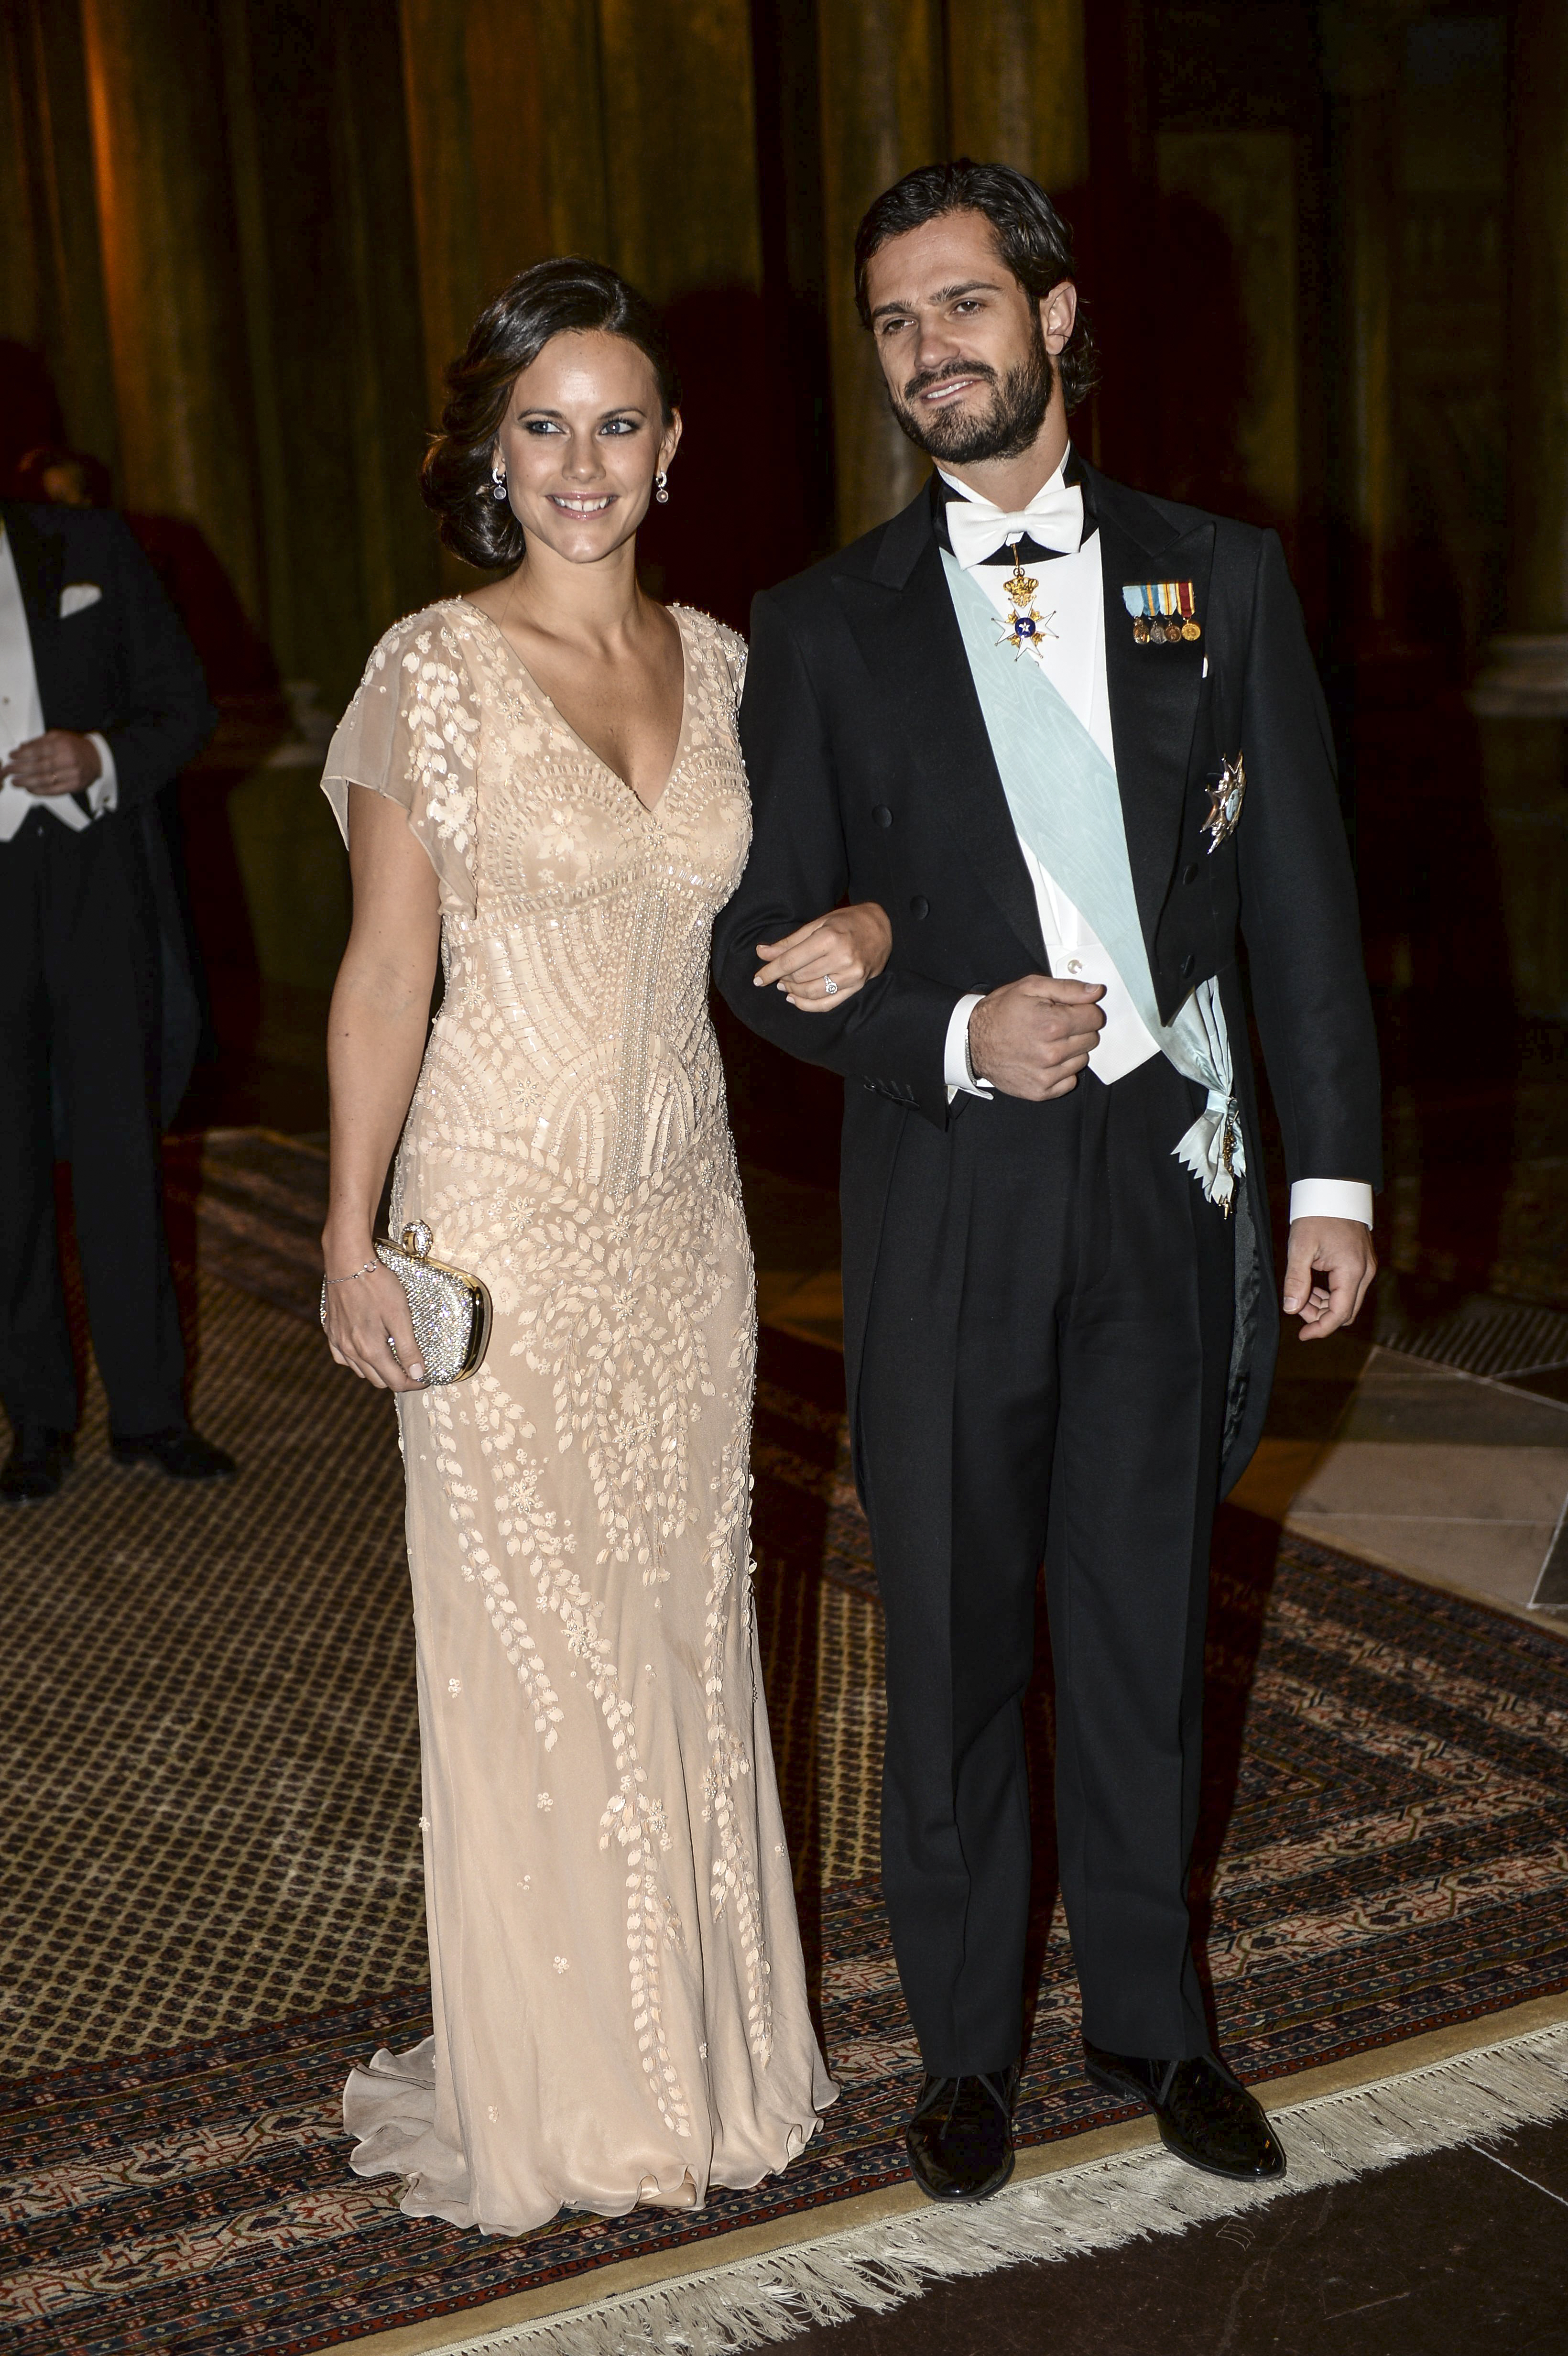 Kung Carl XVI Gustaf, Prins Carl Philip, Facebook, Bröllop, Prinsessan Sofia, Kungliga bröllop